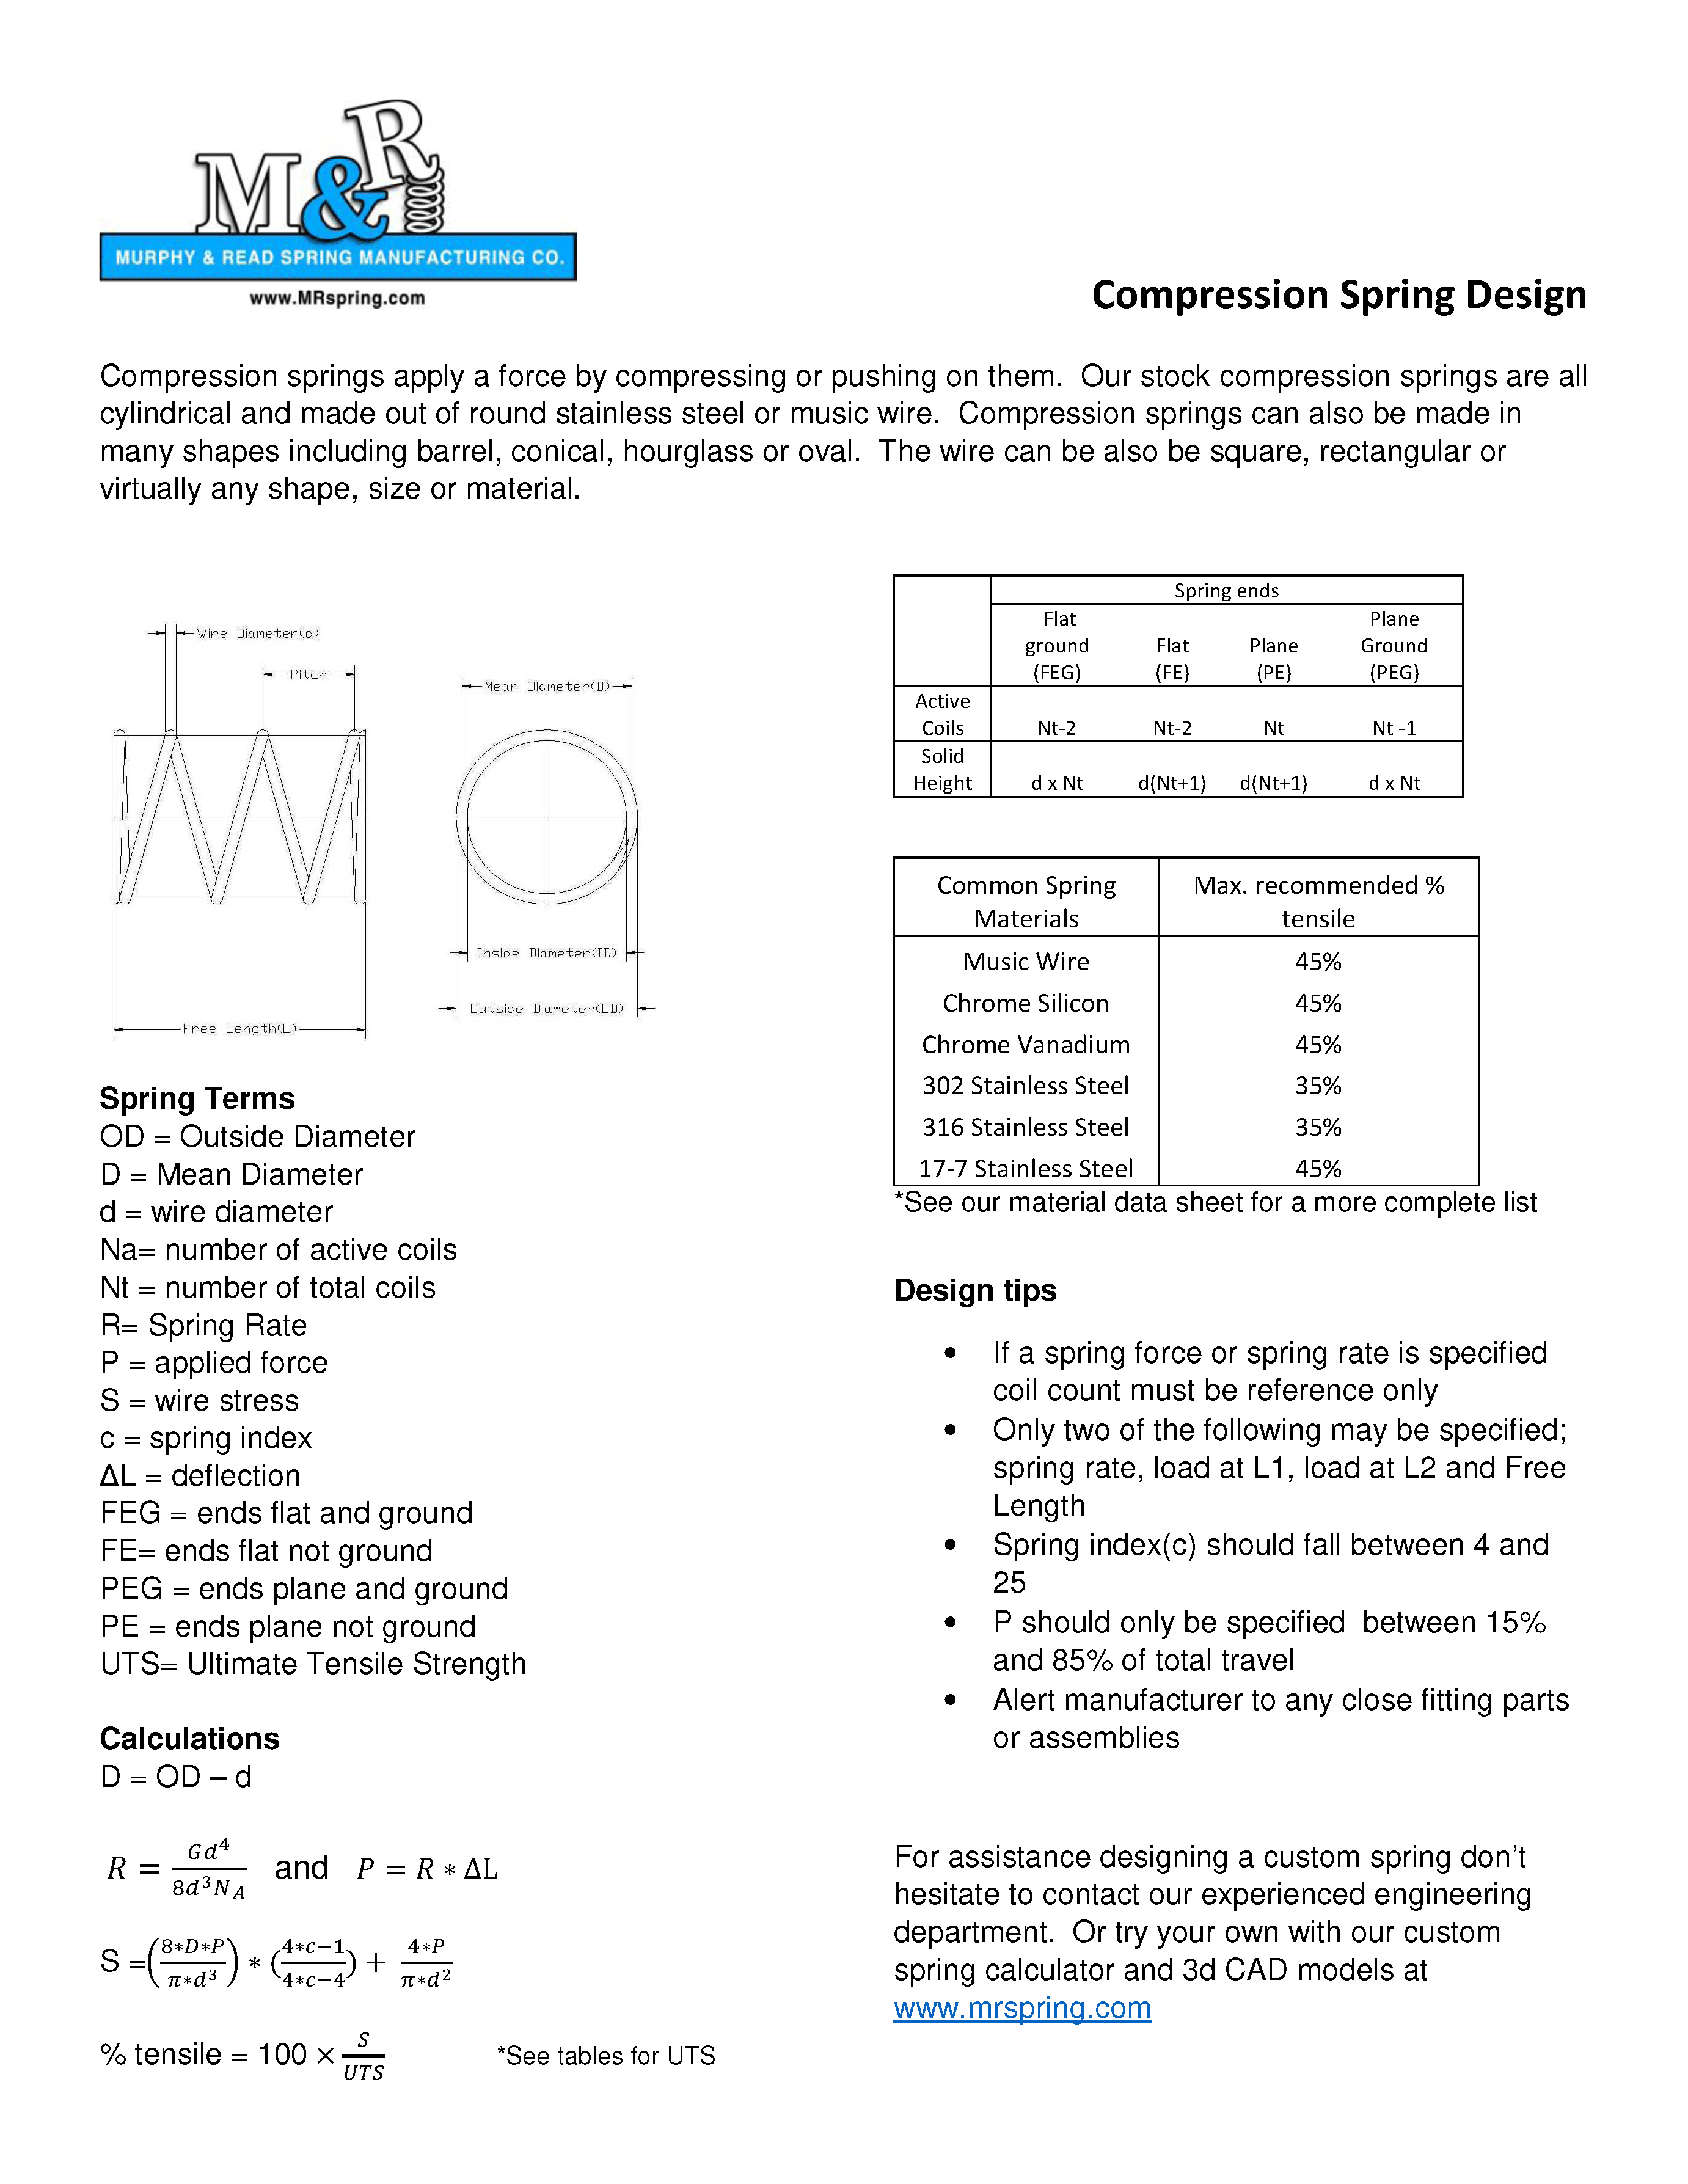 Compression Spring Design Info_Page_1